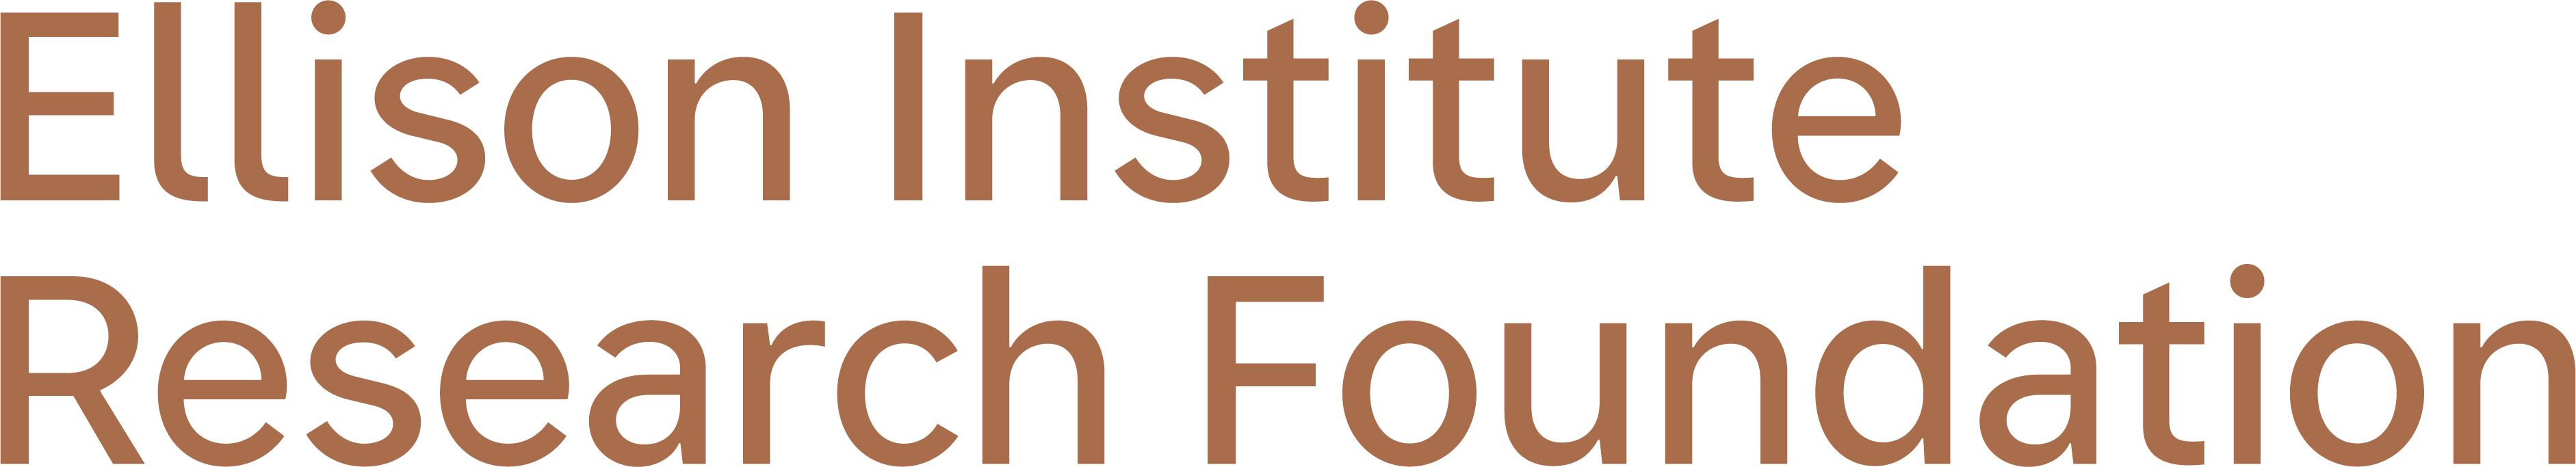 Ellison Institute Research Foundation